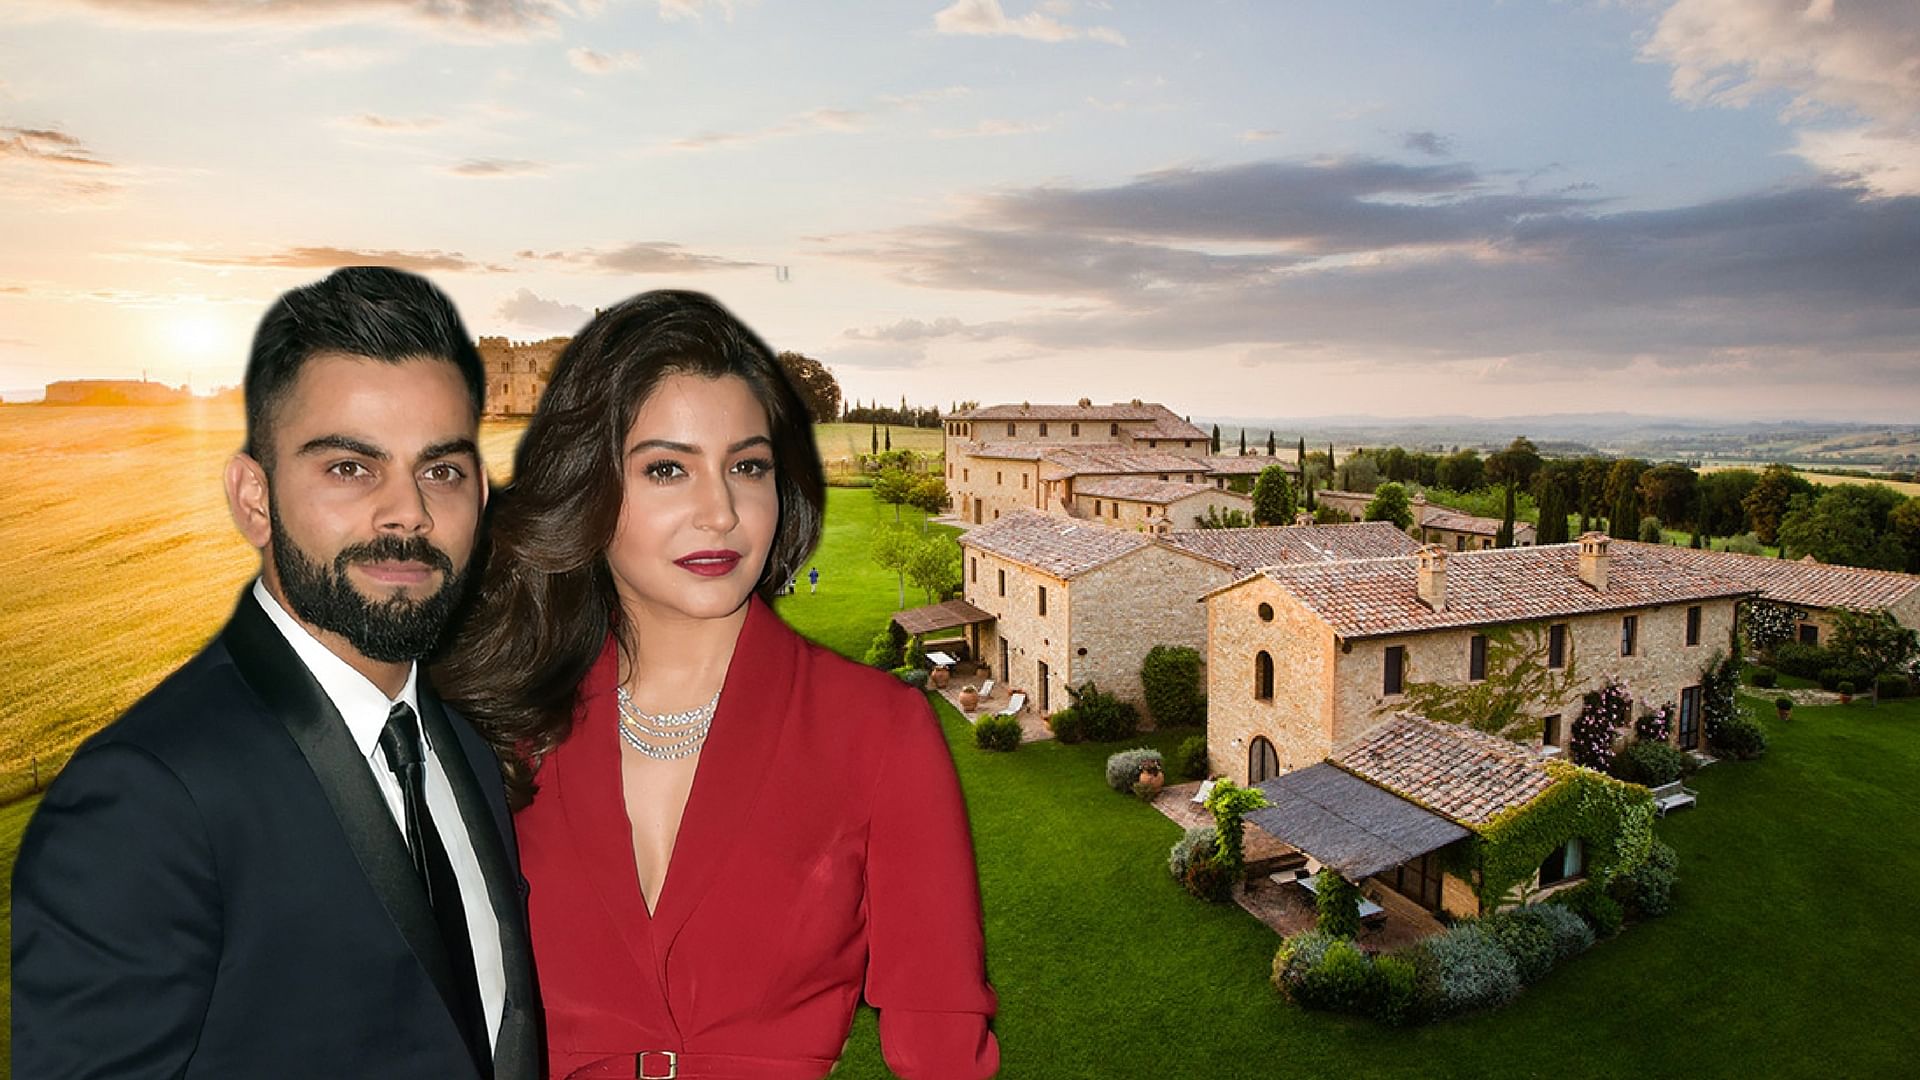 The Virat Kohli - Anushka Sharma wedding will reportedly take place at Borgo Finocchieto, Italy.